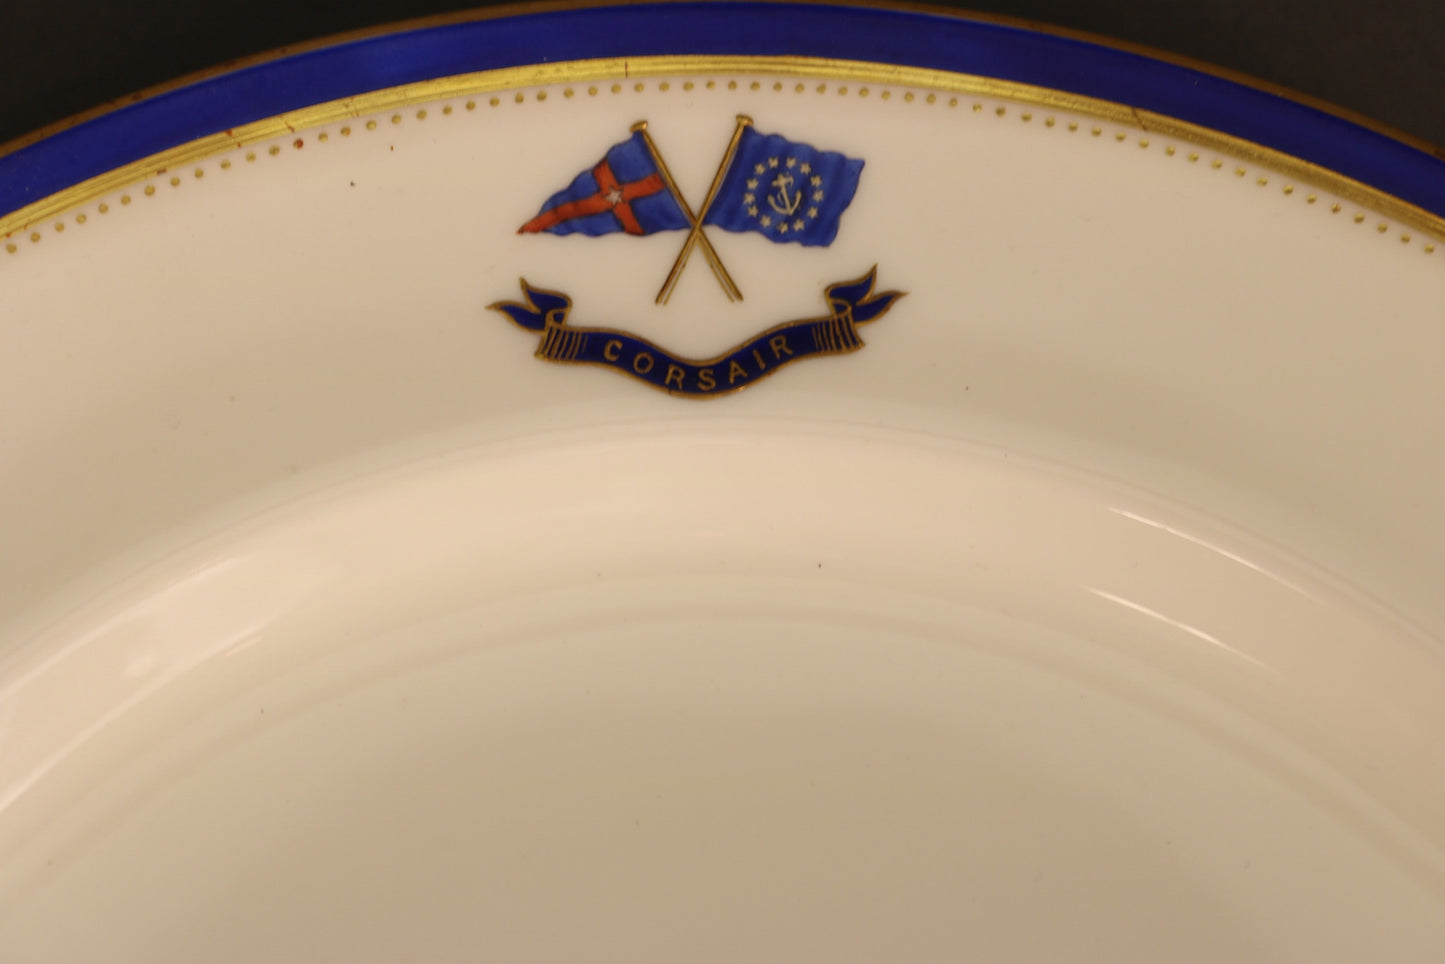 Minton's Dinner Plate | New York Yacht Club | J.P. Morgan's Commodore Ensign | 1898 - Lannan Gallery